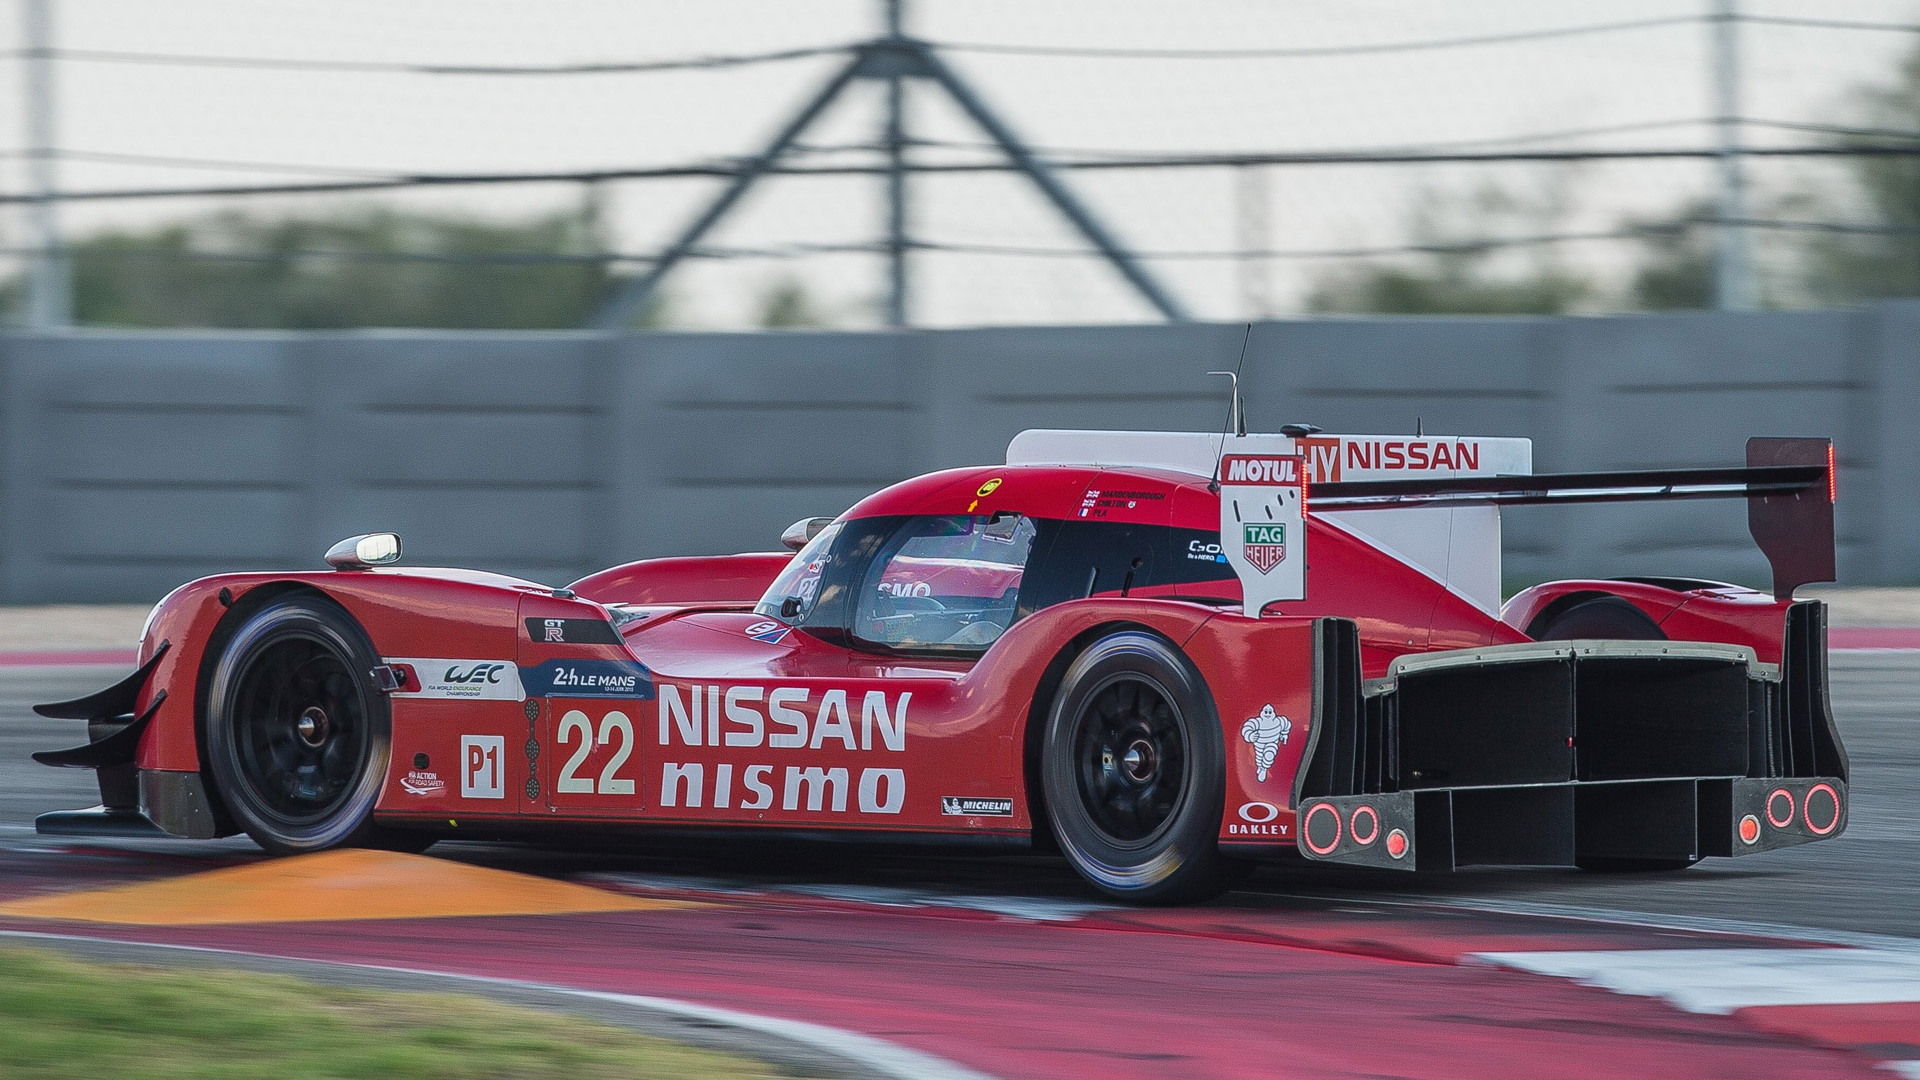 Upgraded 2015 Nissan GT-R LM NISMO LMP1 race car